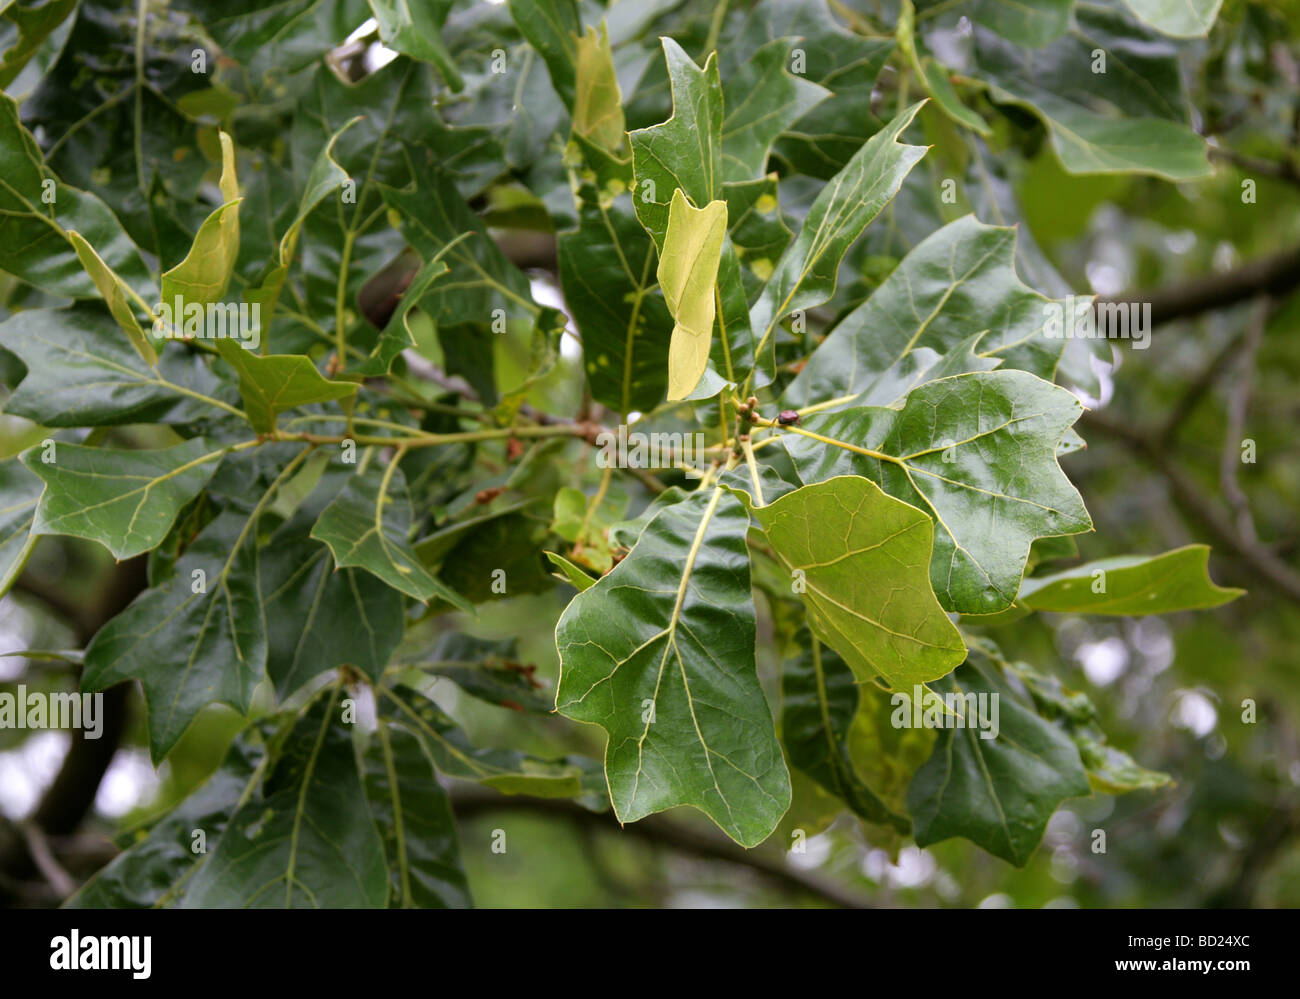 Black Jack or Blackjack Oak Tree Leaves, Quercus marilandica, Fagaceae, North East USA, North America Stock Photo